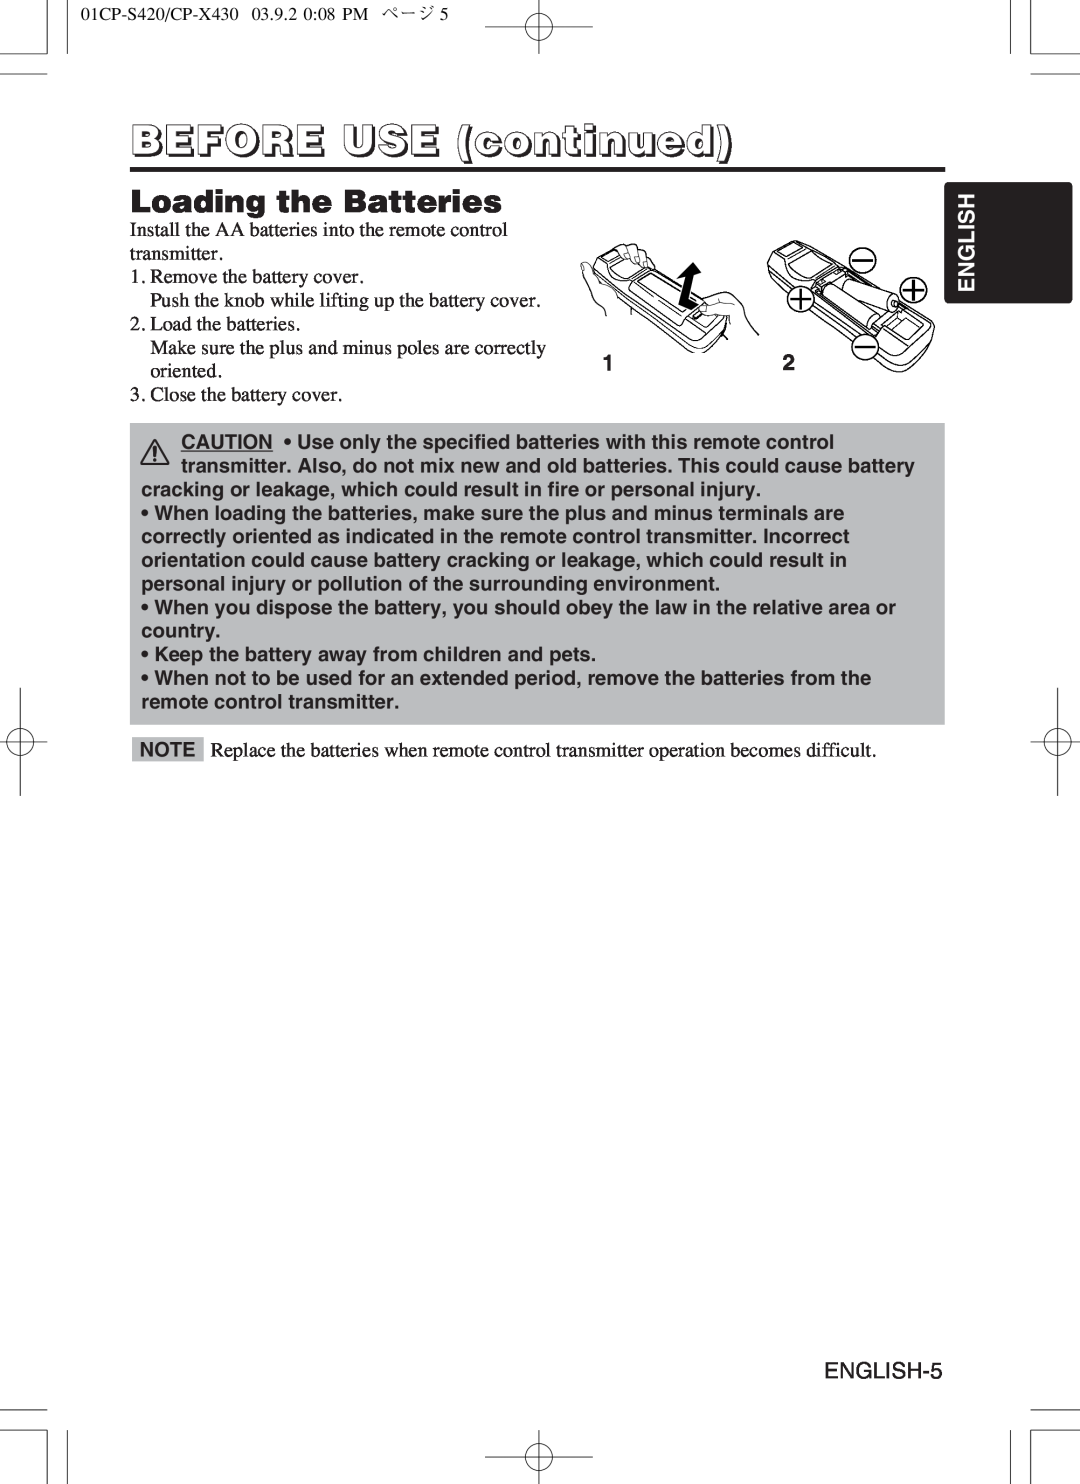 Hitachi CP-S420WA, CP-X430WA user manual Loading the Batteries, BEFORE USE continued, English, ENGLISH-5 